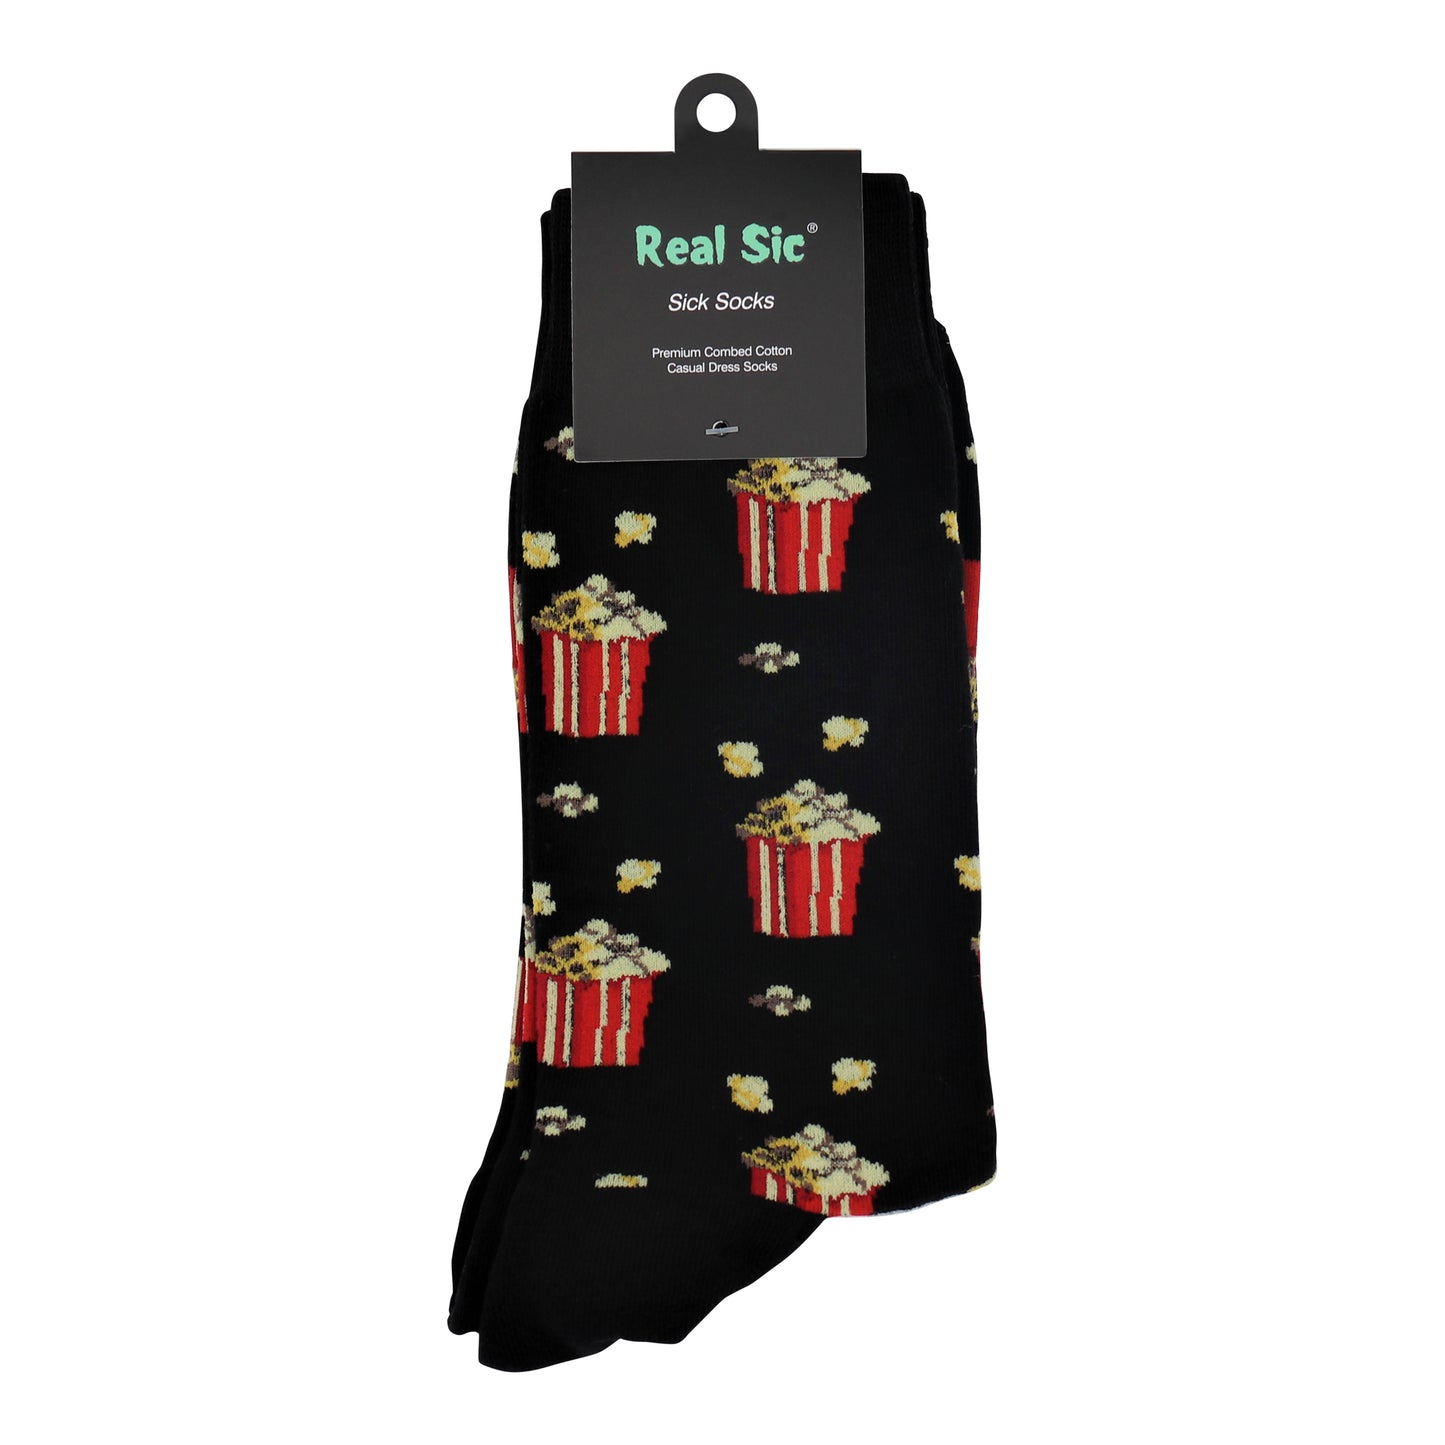 Favorite Food Fruits Socks - Popcorn - for Men and Women